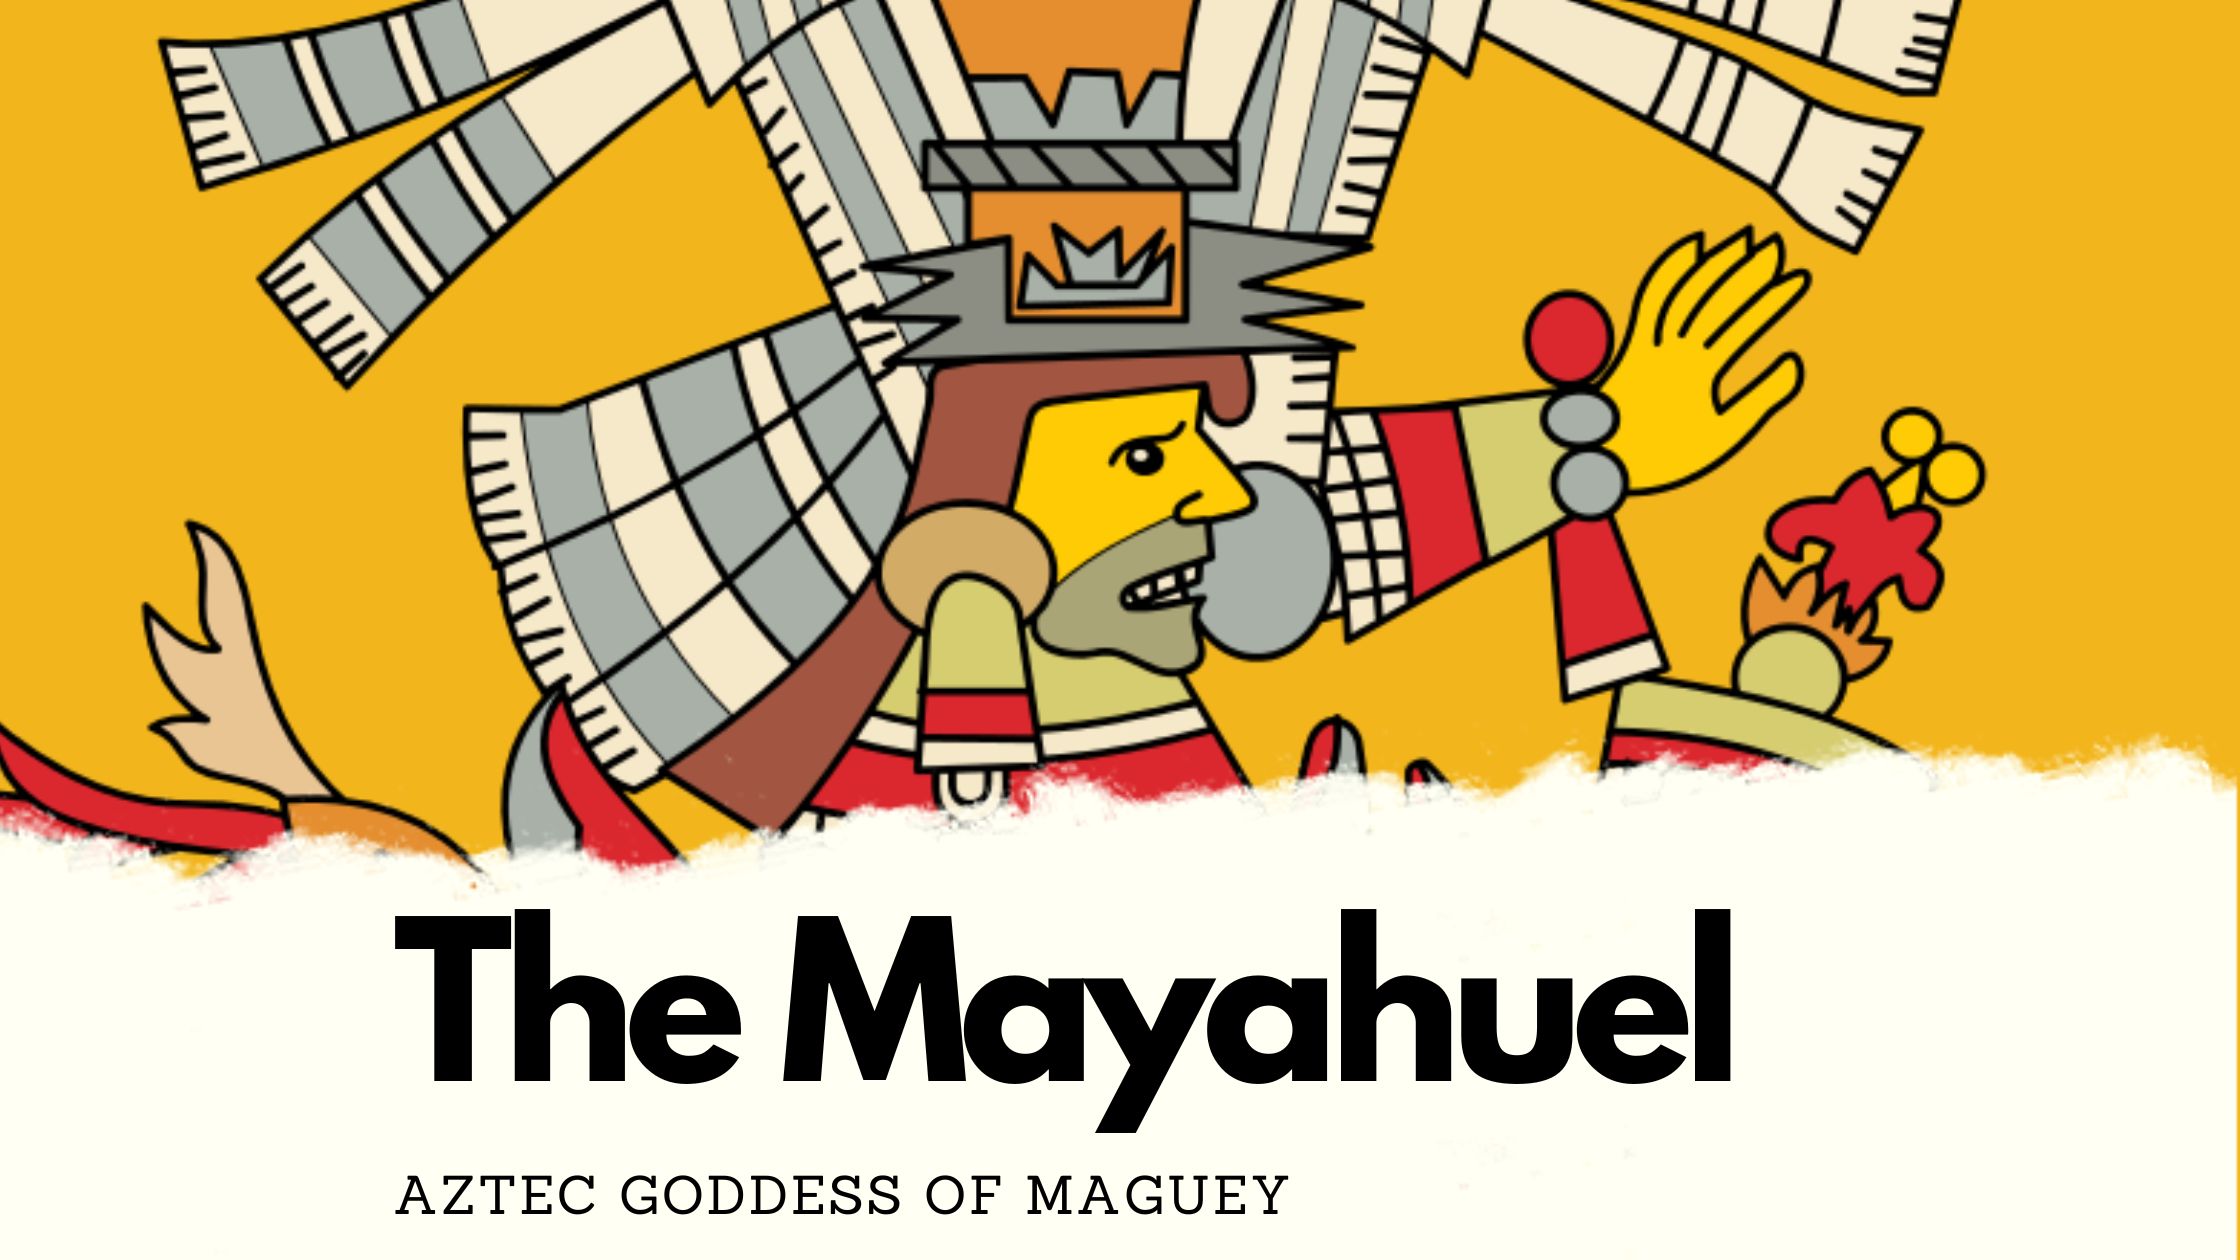 Aztec Goddess of Maguey Mayahuel